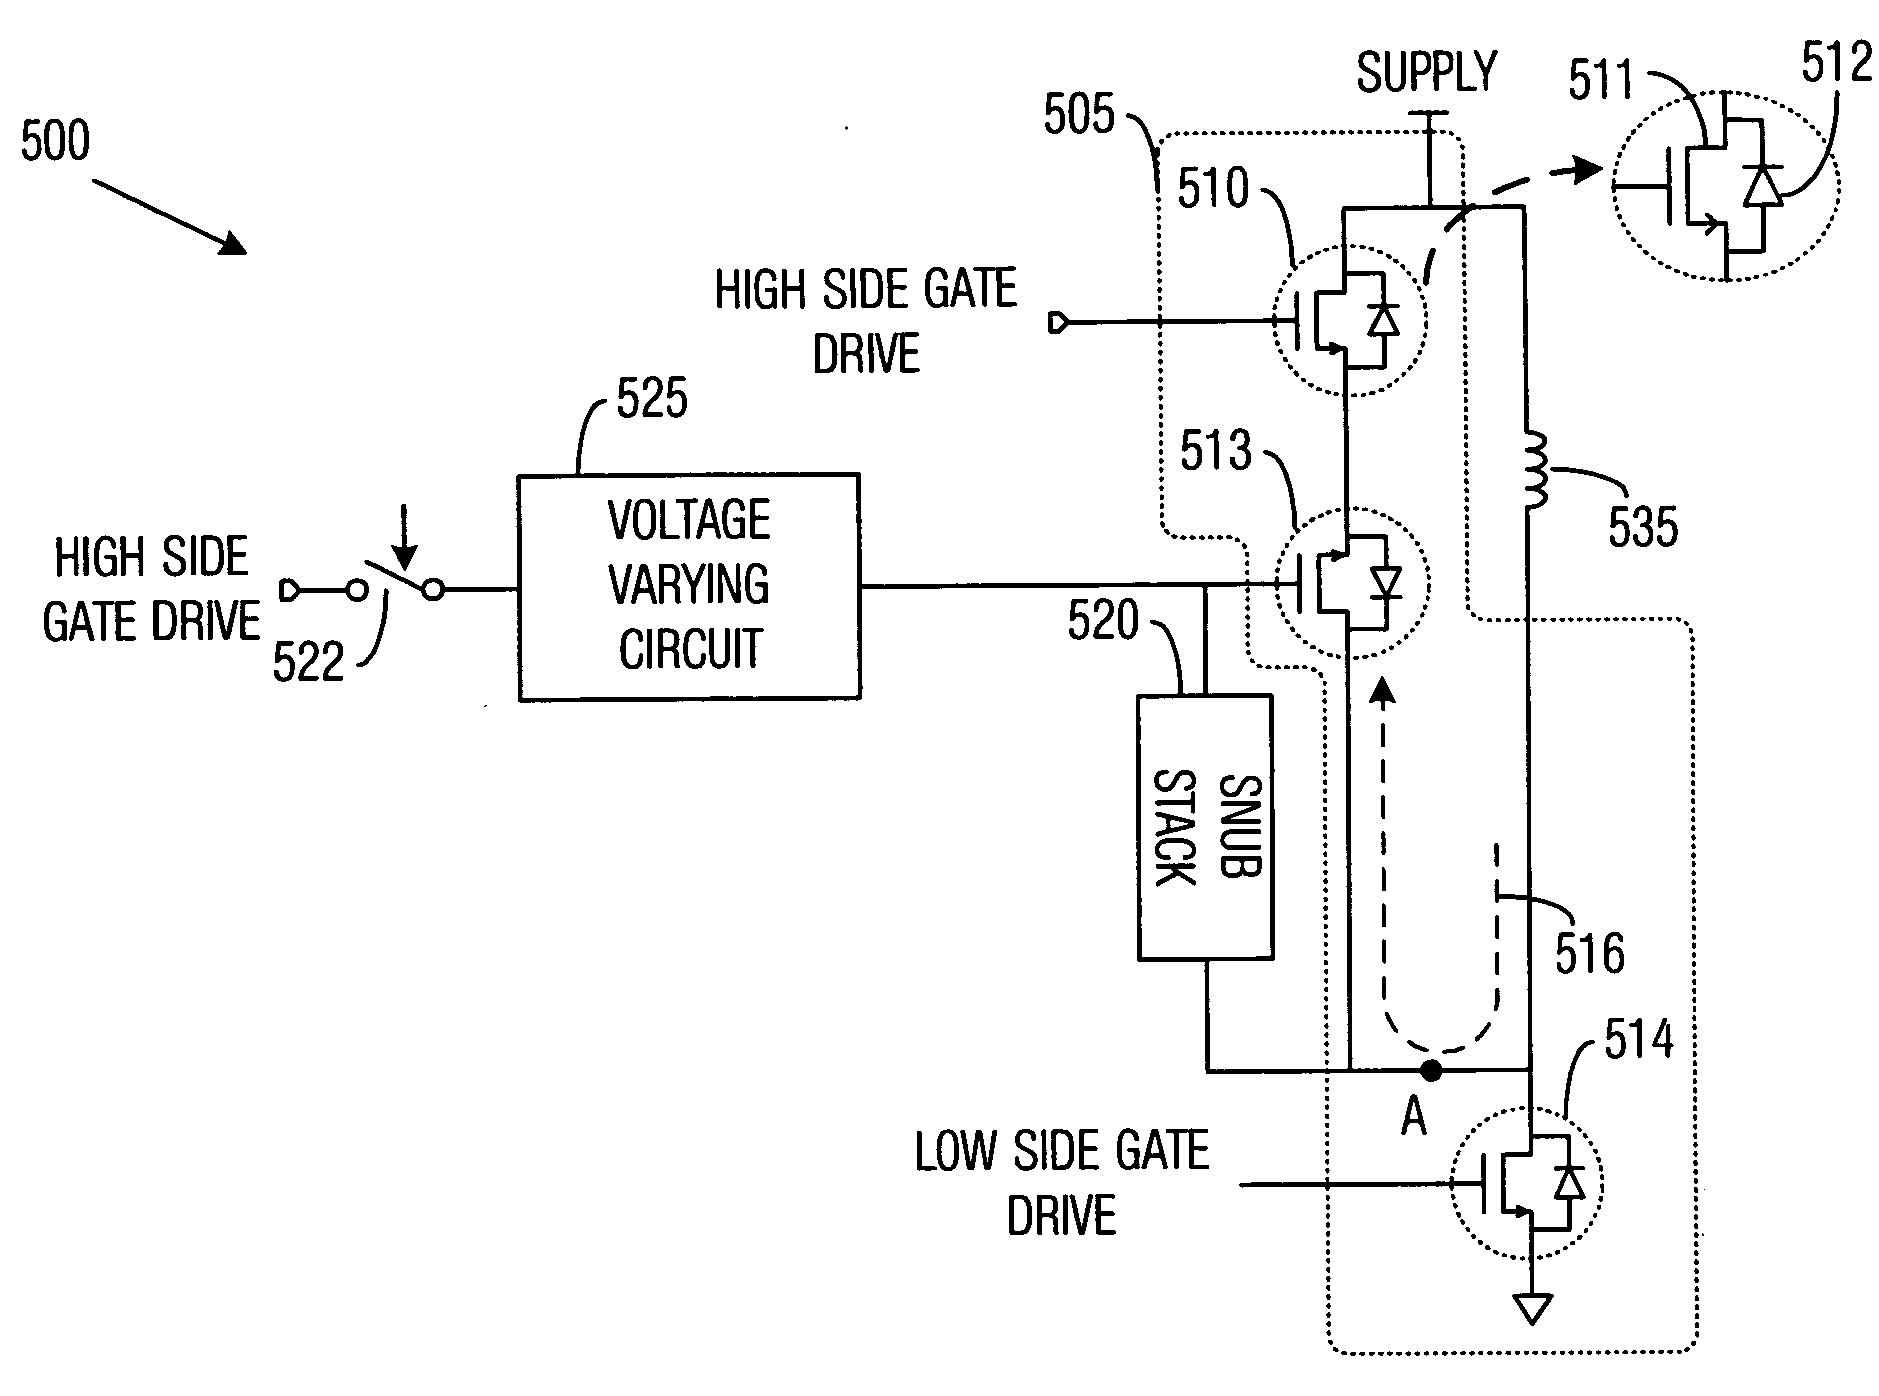 Current control via a variable voltage snubbing network